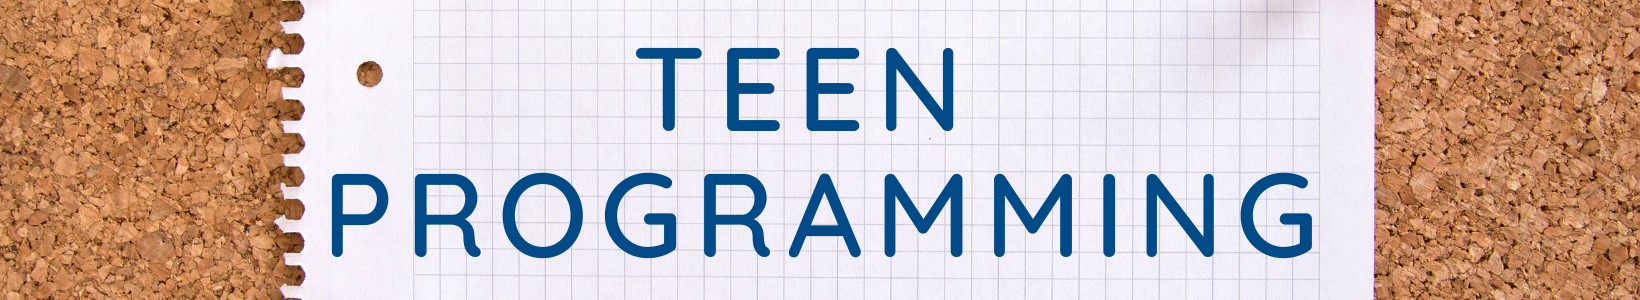 Teen Programming (2)